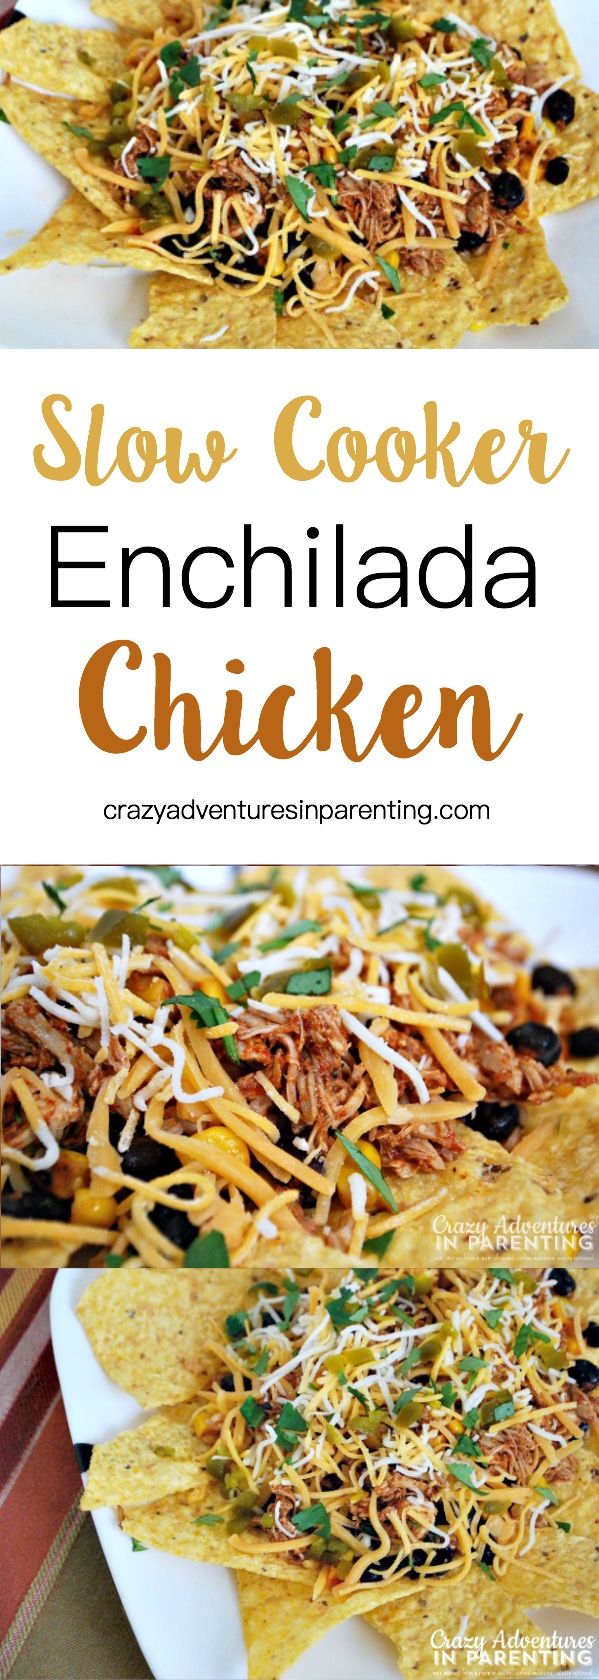 Slow Cooker Enchilada Chicken